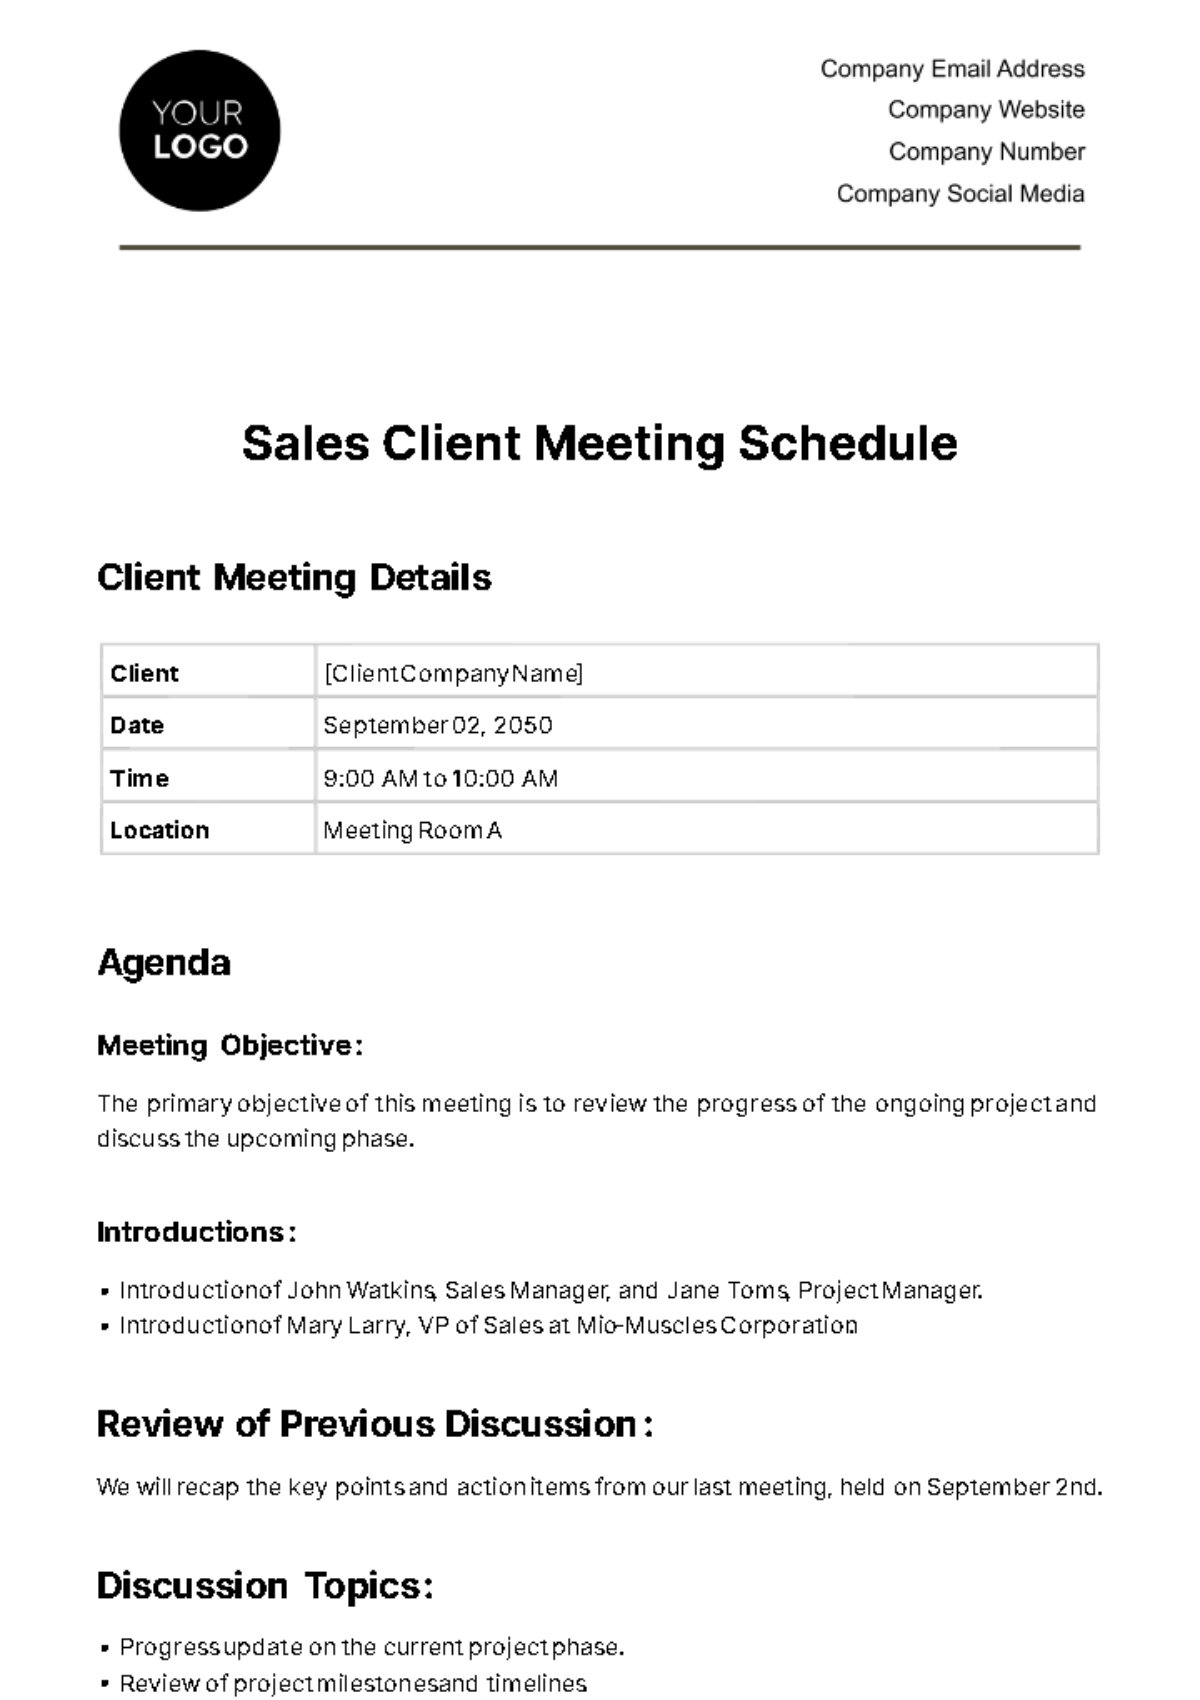 Sales Client Meeting Schedule Template